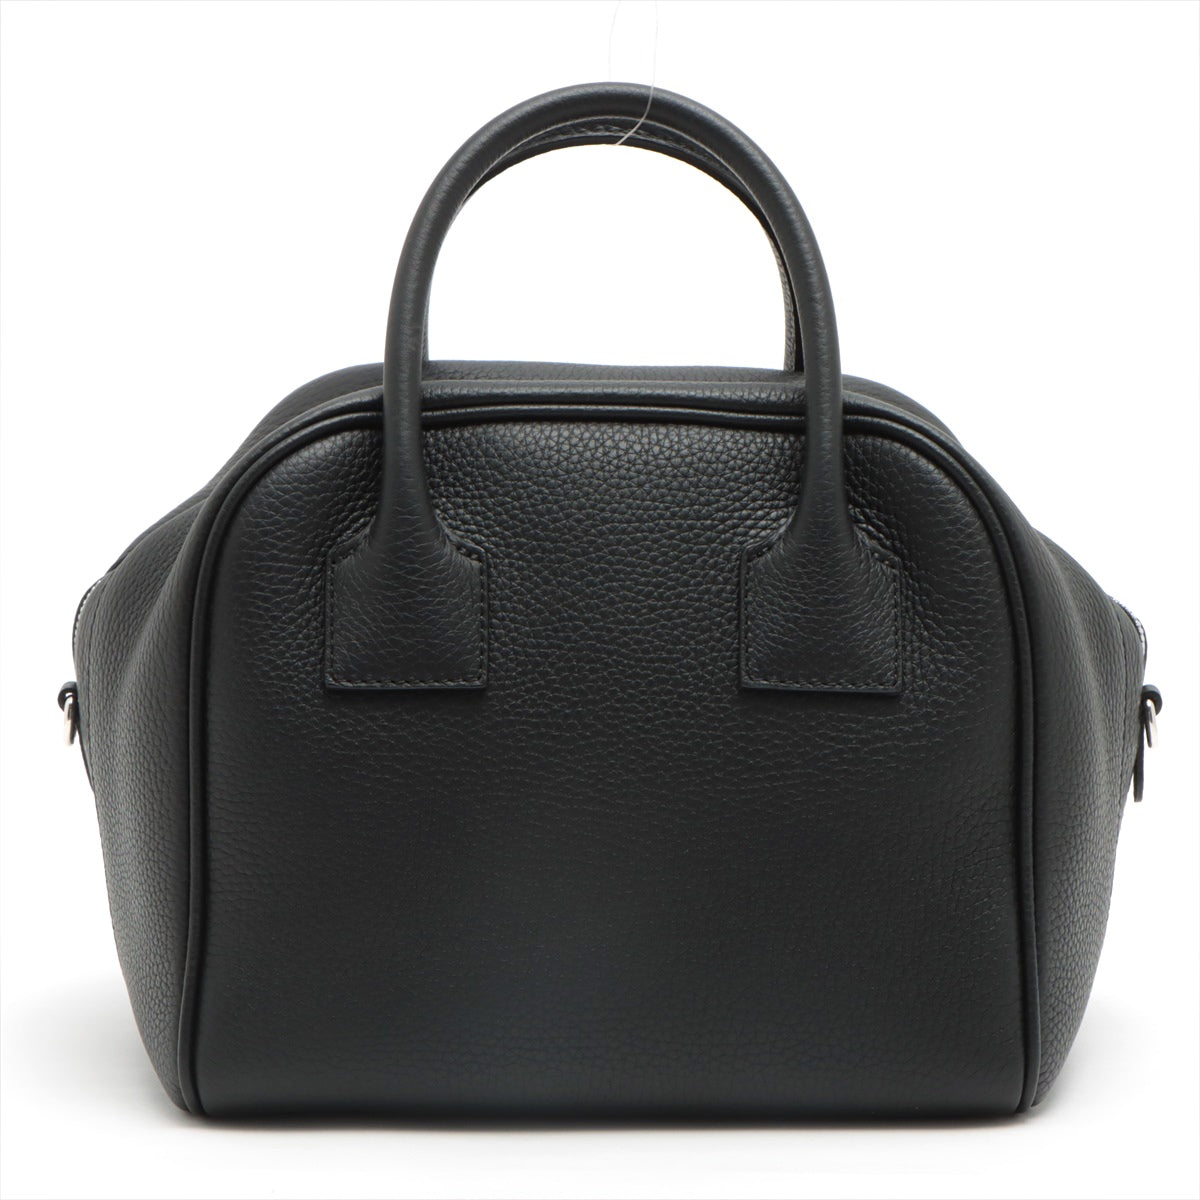 Burberry Leather 2 Way Handbag Black